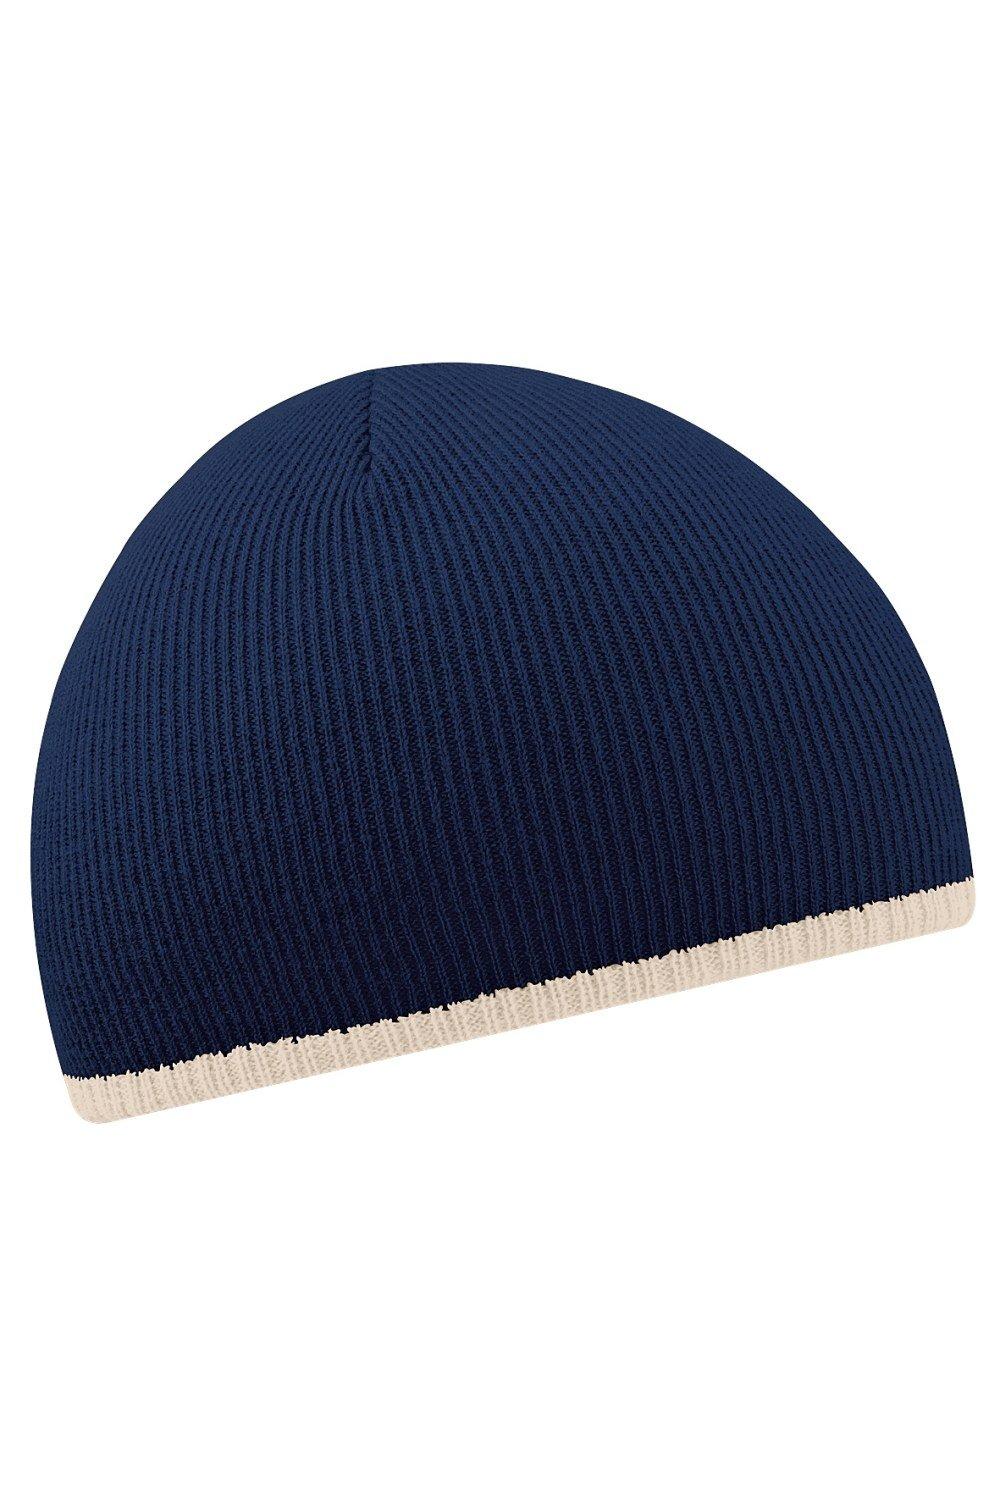 Двухцветная вязаная зимняя шапка-бини Beechfield, темно-синий двухцветная вязаная шапка sevenext